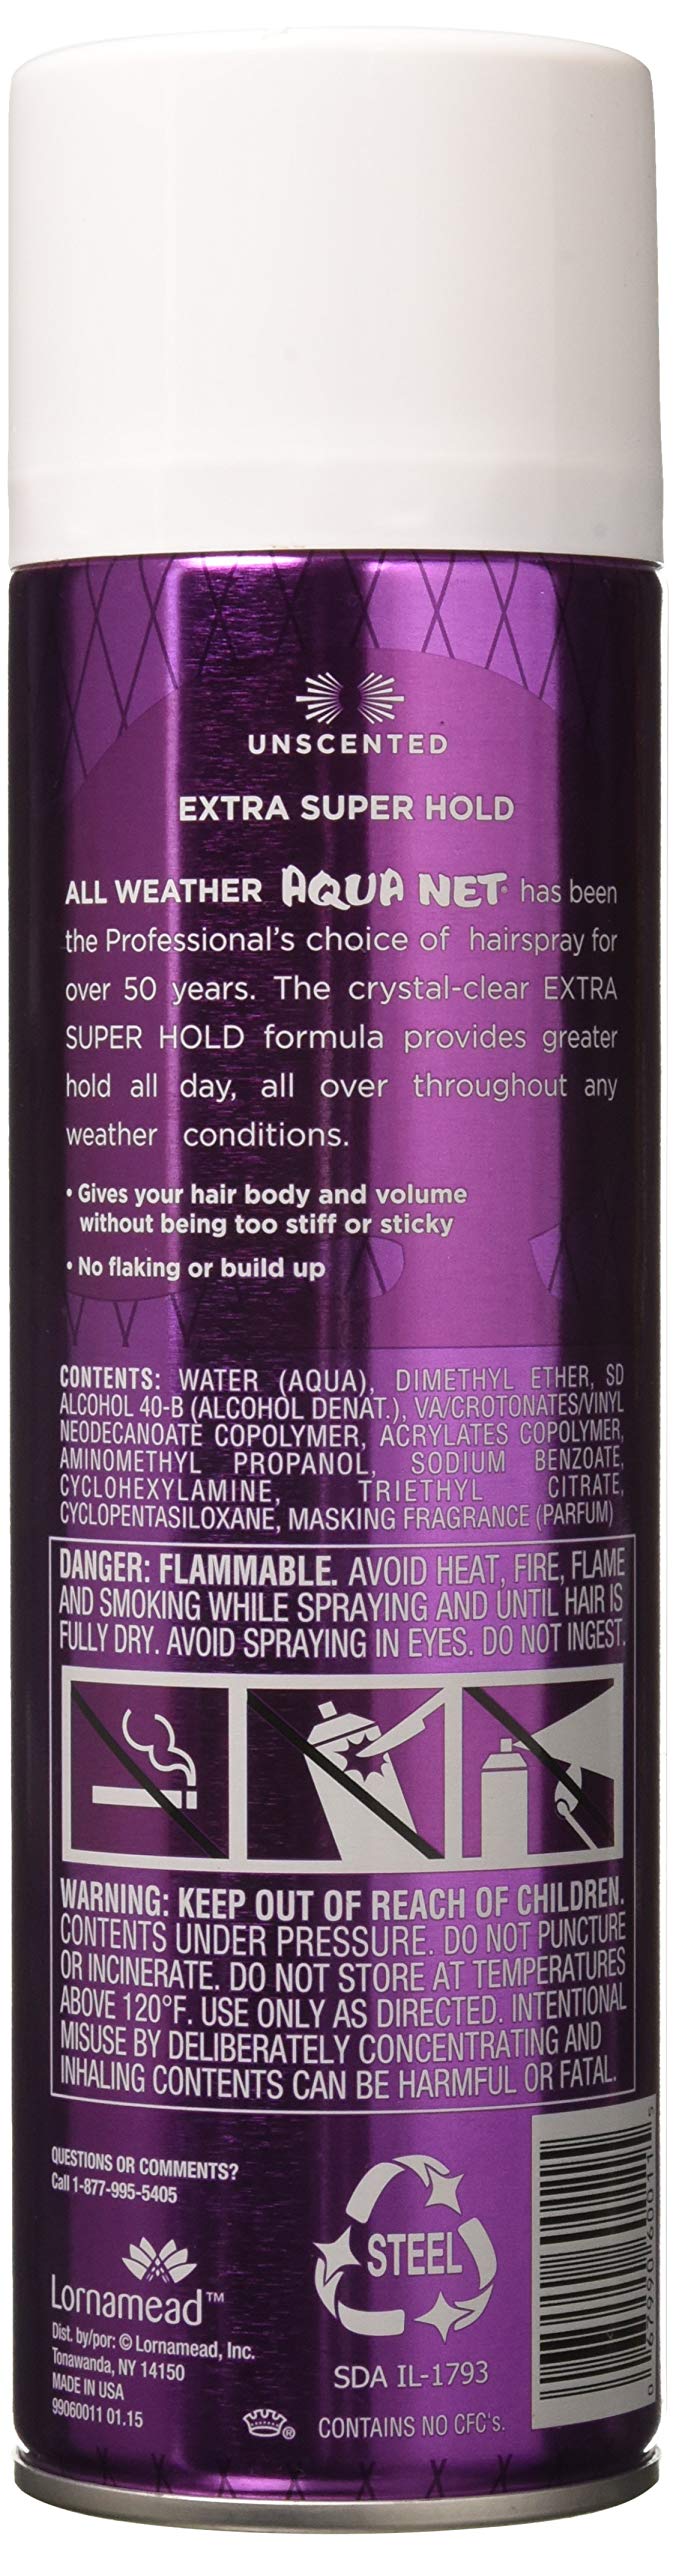 Buy Aqua Net Extra Super Hold Professional Hair Spray Unscented 11 oz